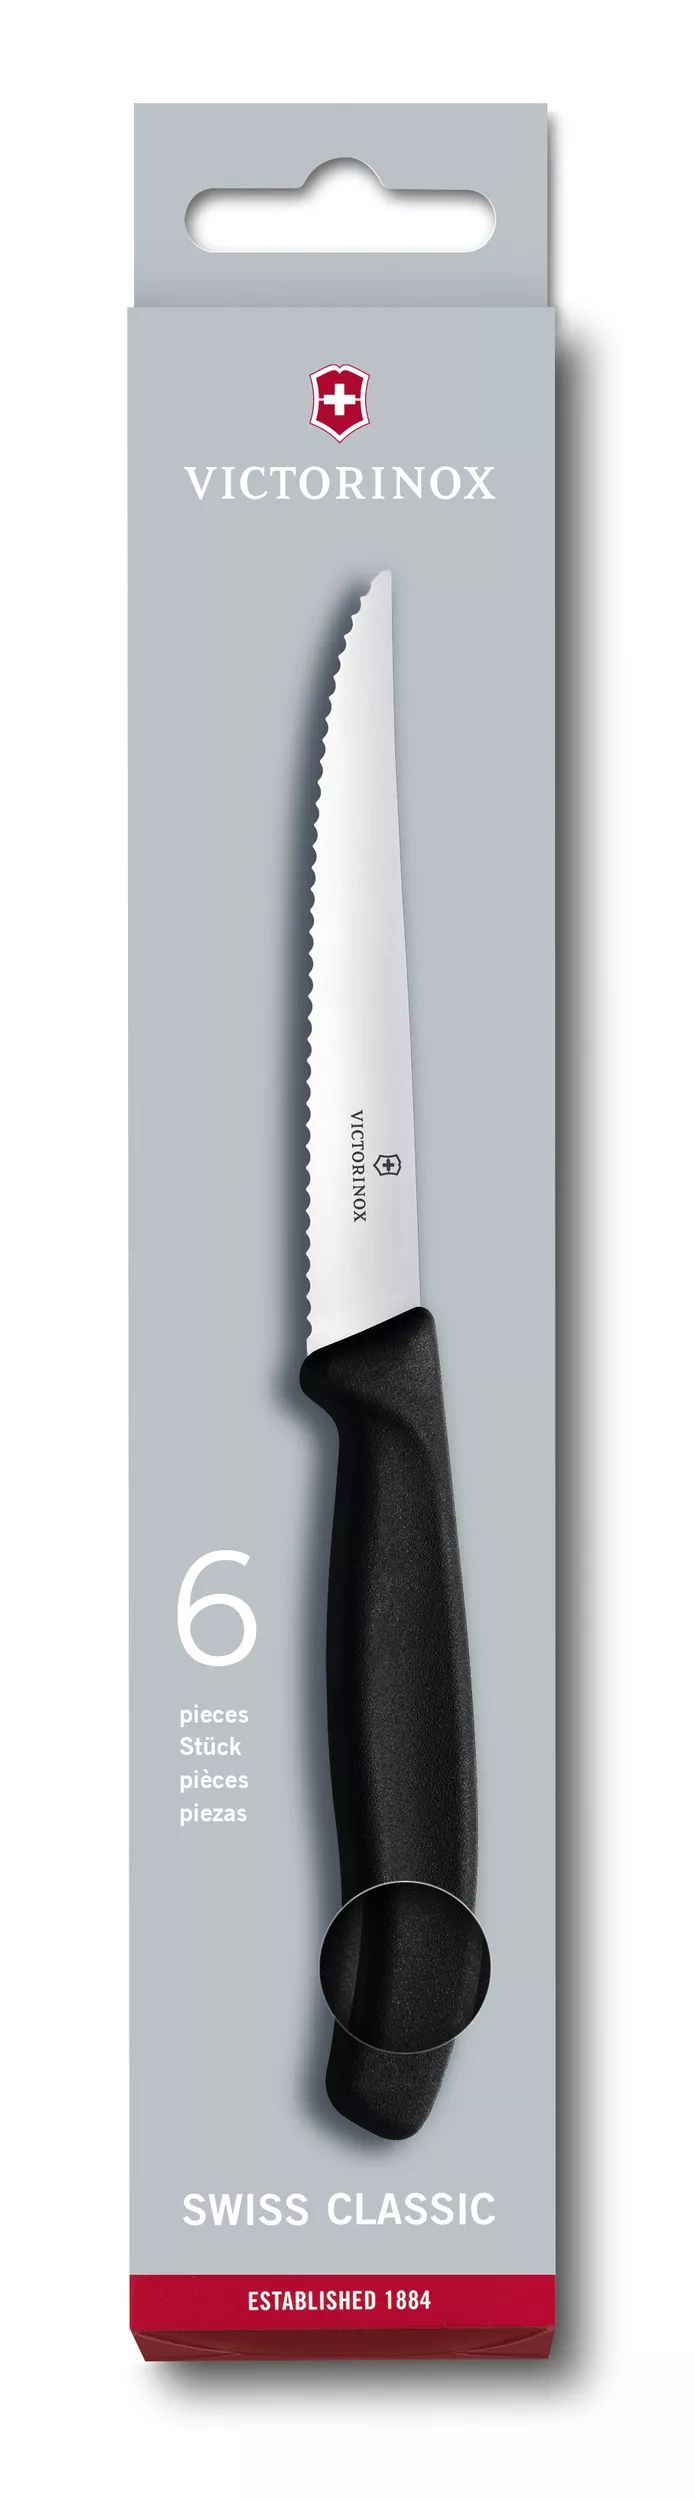 Swiss Classic Steak Knife Set, 6 pieces-6.7233.6